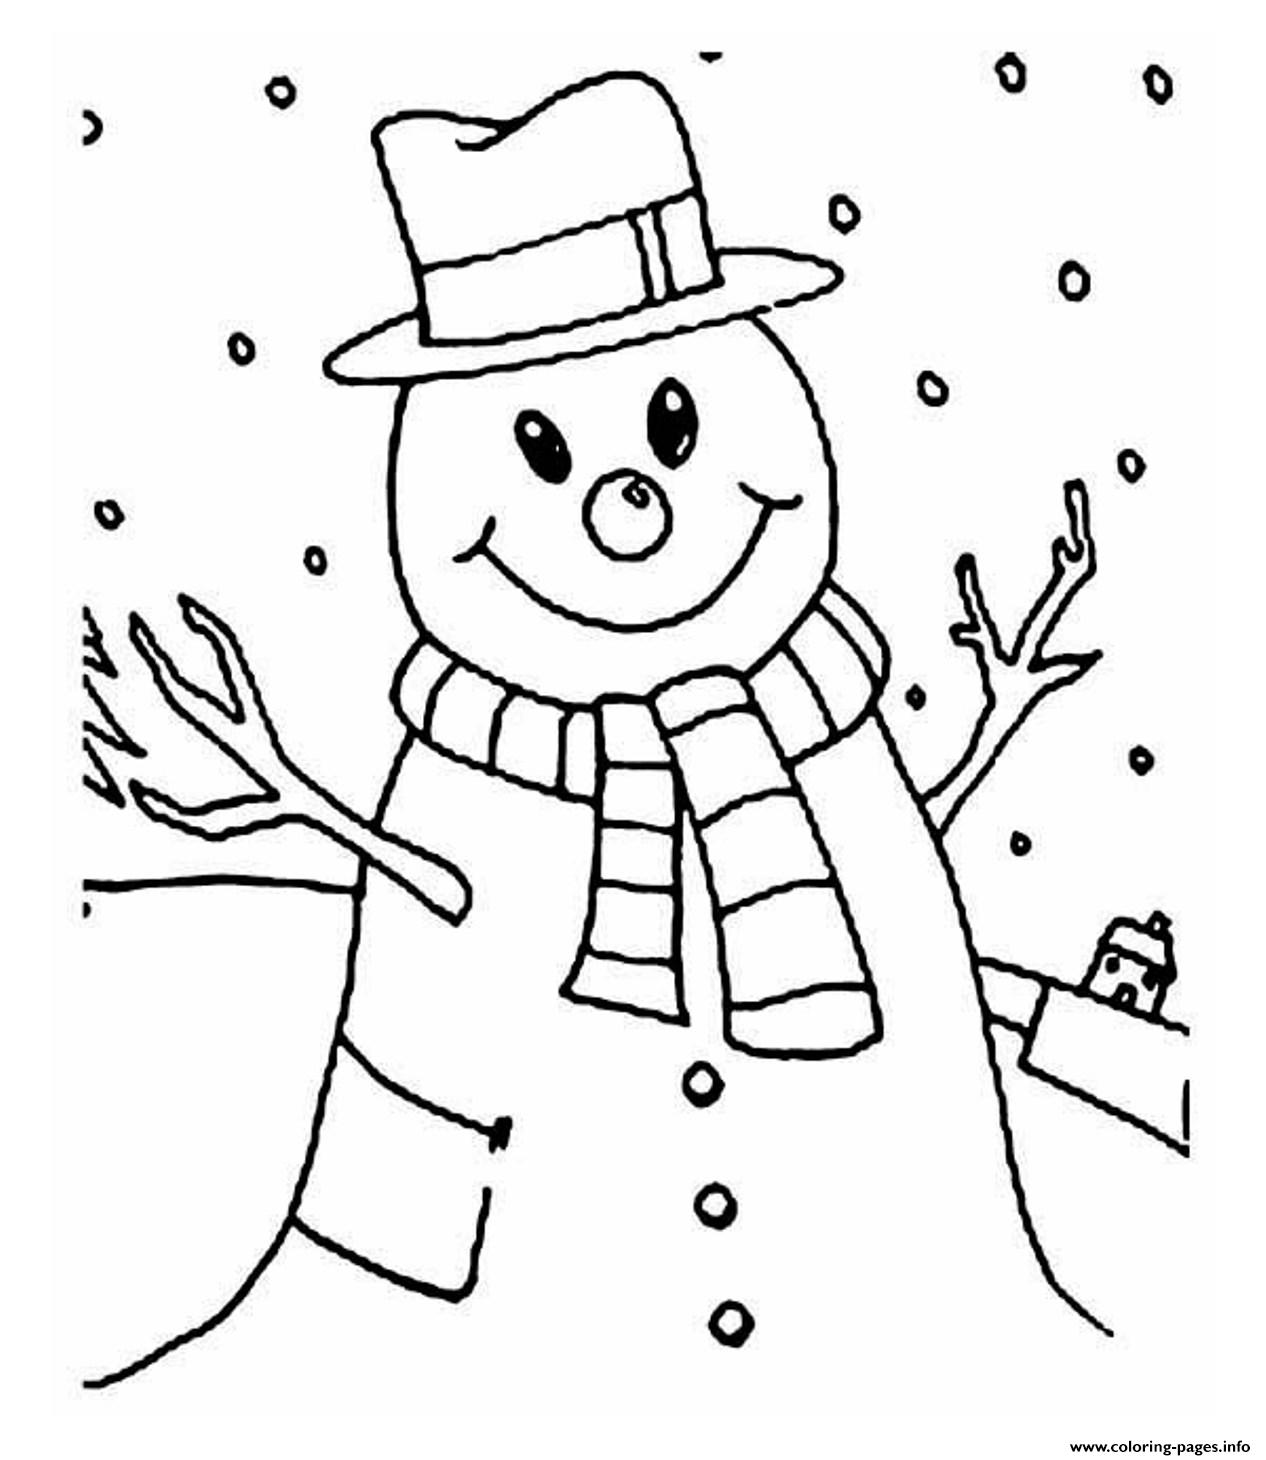 Smiling Snowman S5a5d coloring